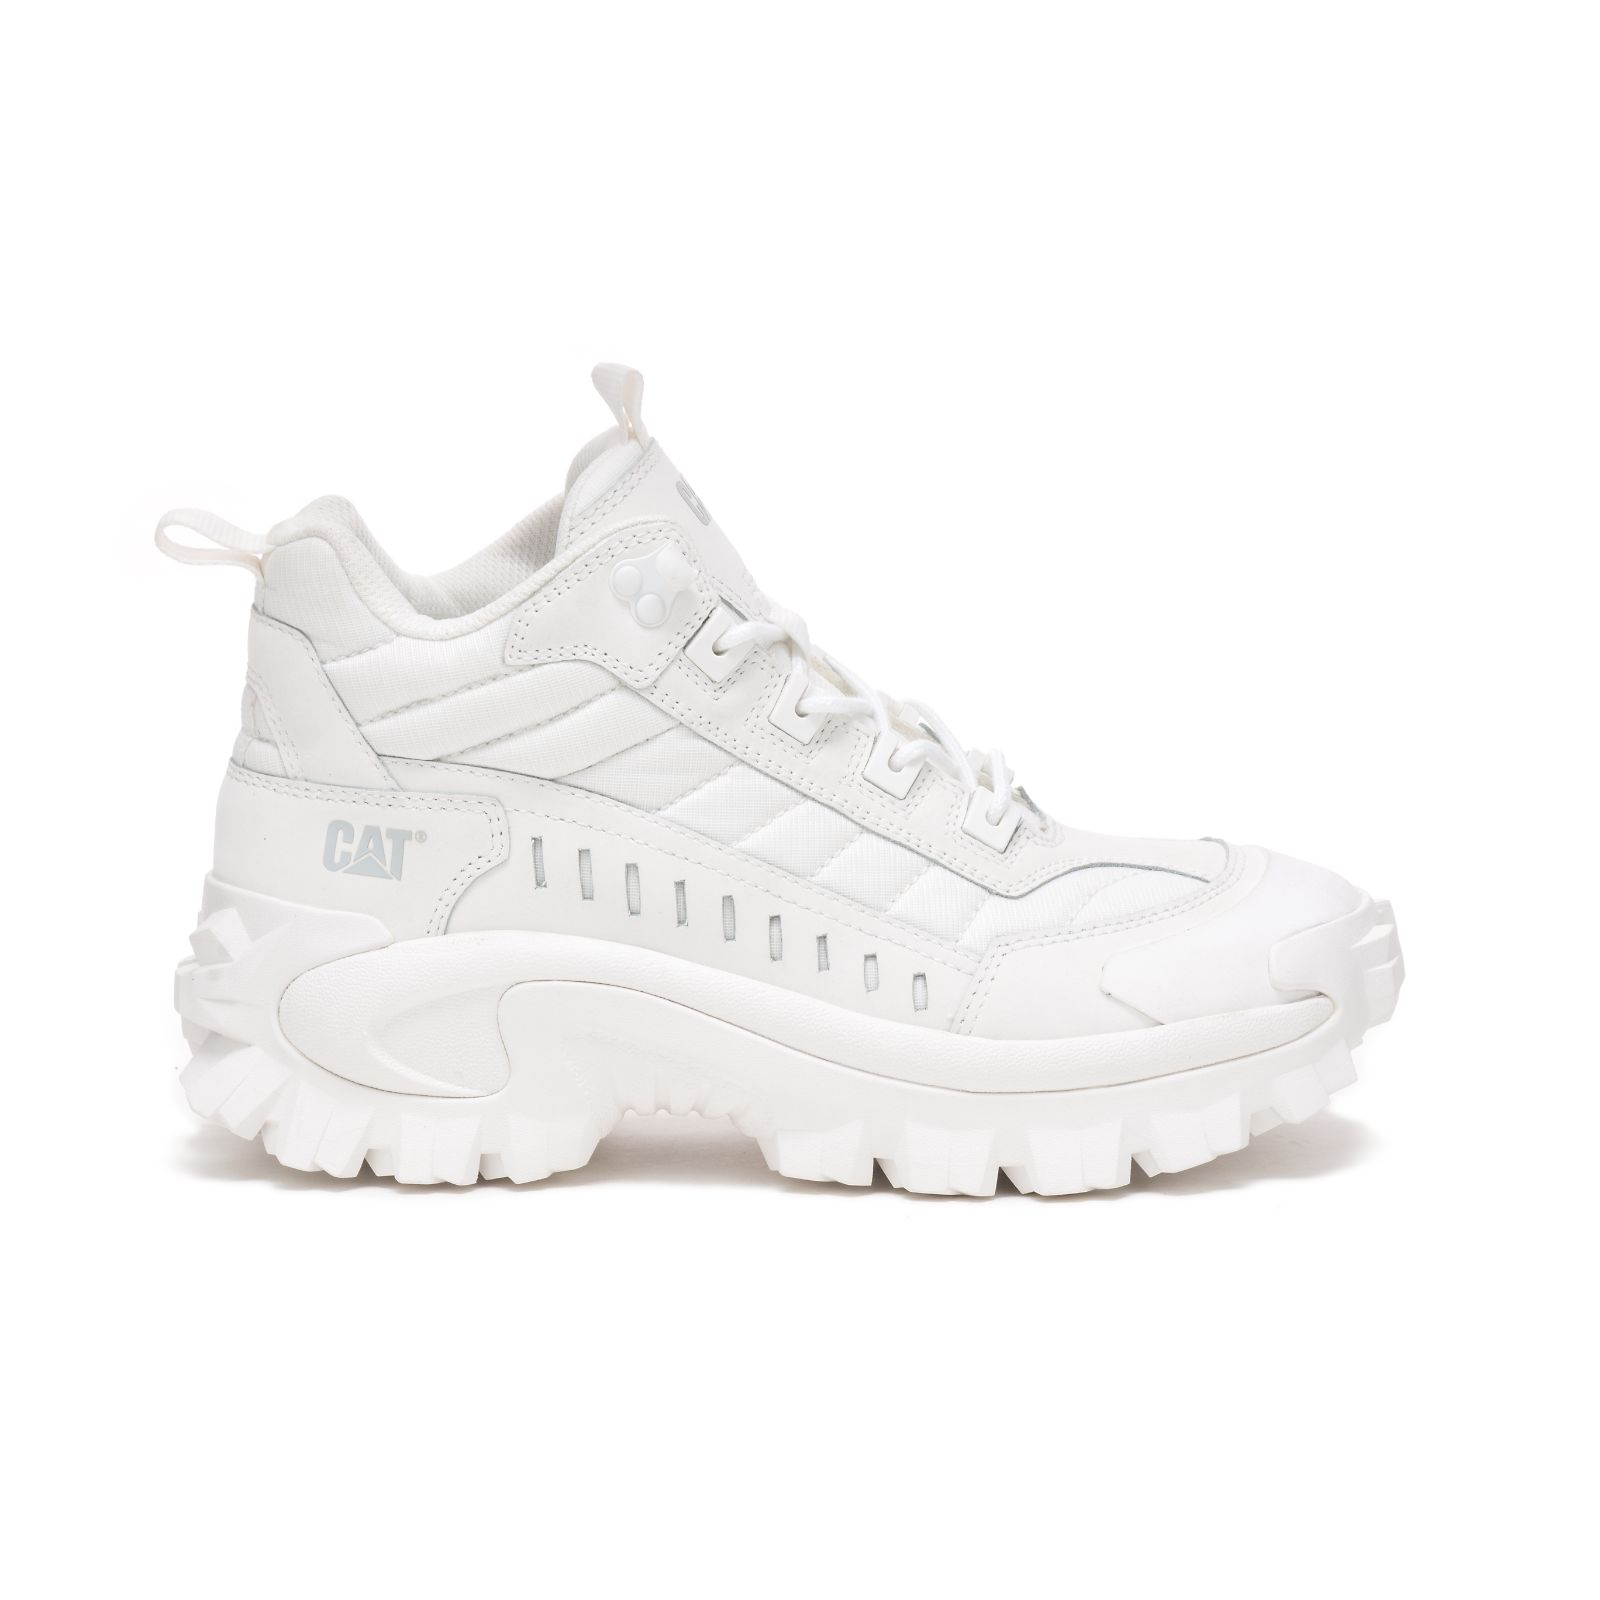 Caterpillar Shoes Sale - Caterpillar Intruder Mid Mens Sneakers White (408513-PIK)